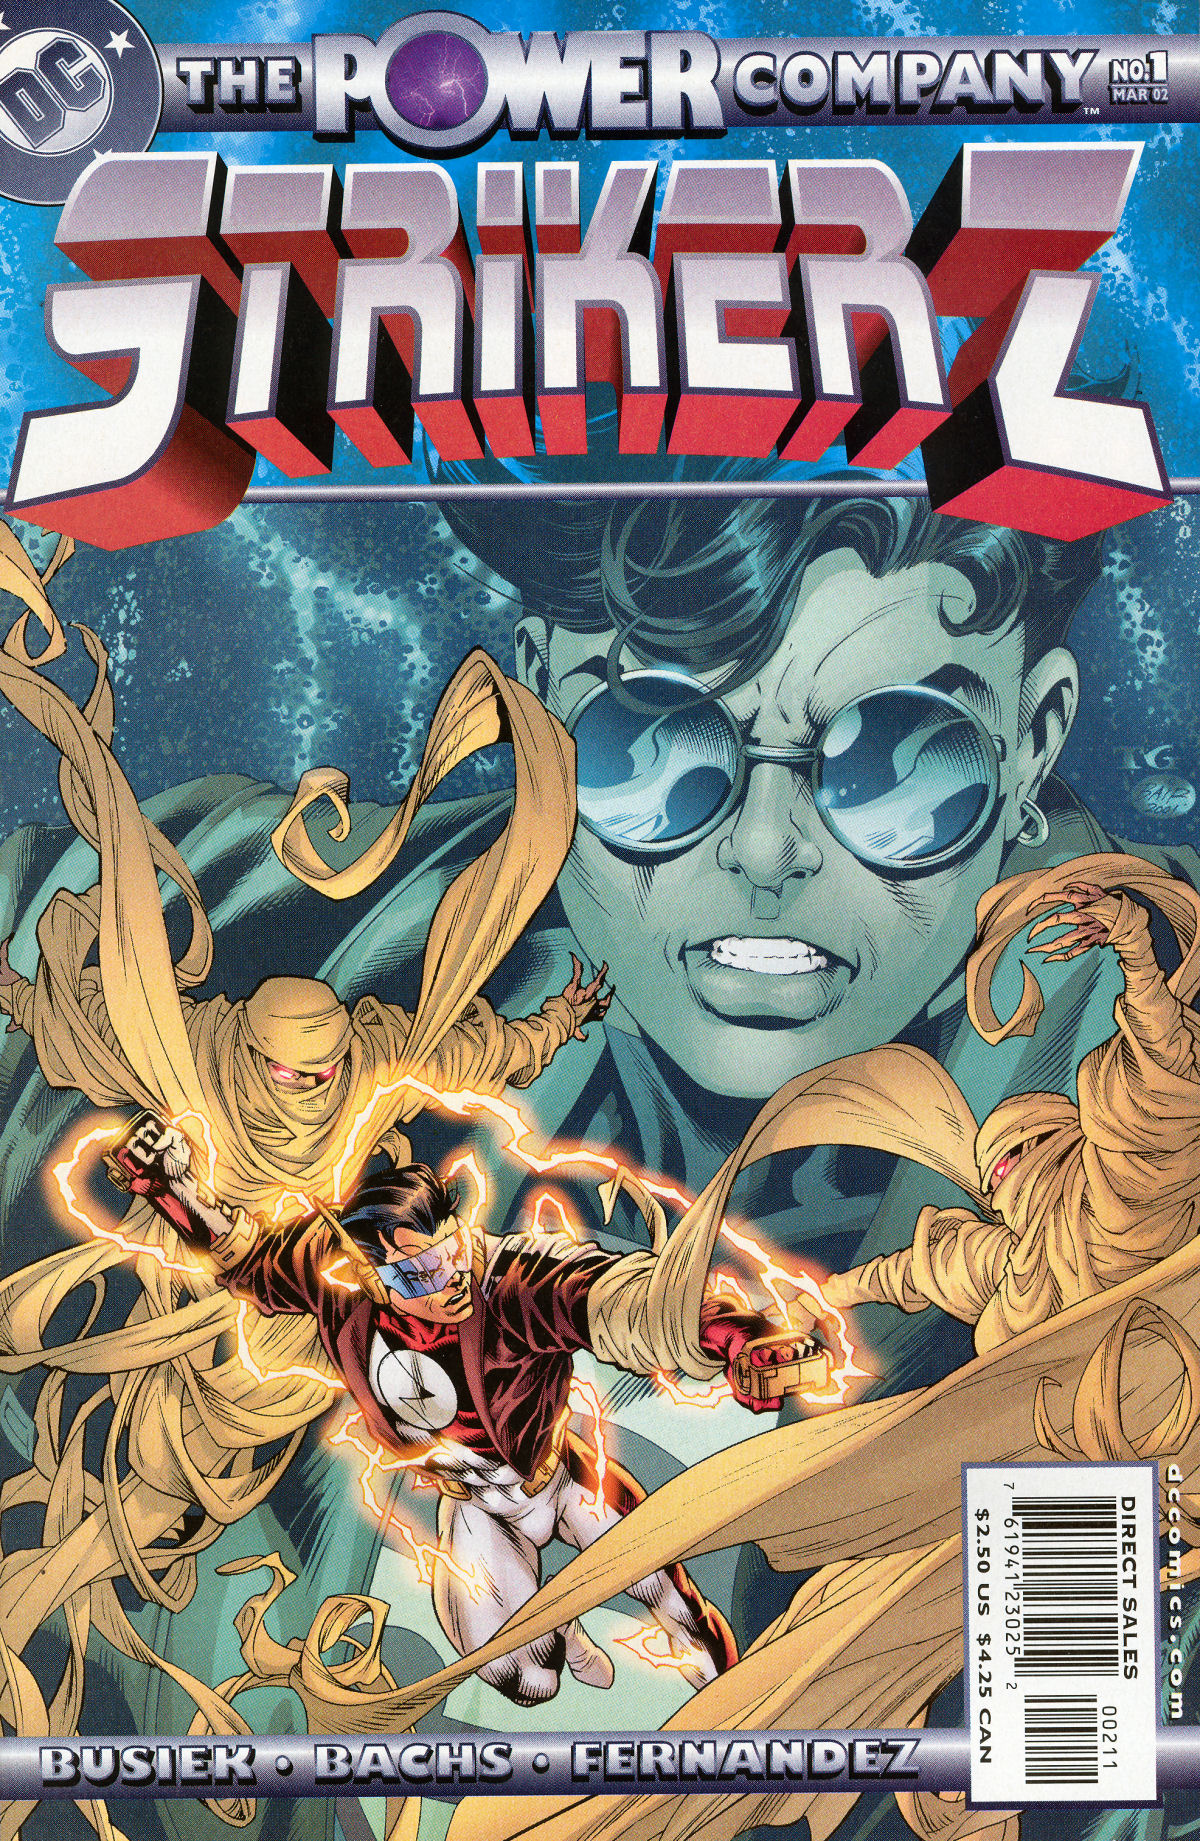 Read online The Power Company: Striker Z comic -  Issue # Full - 1